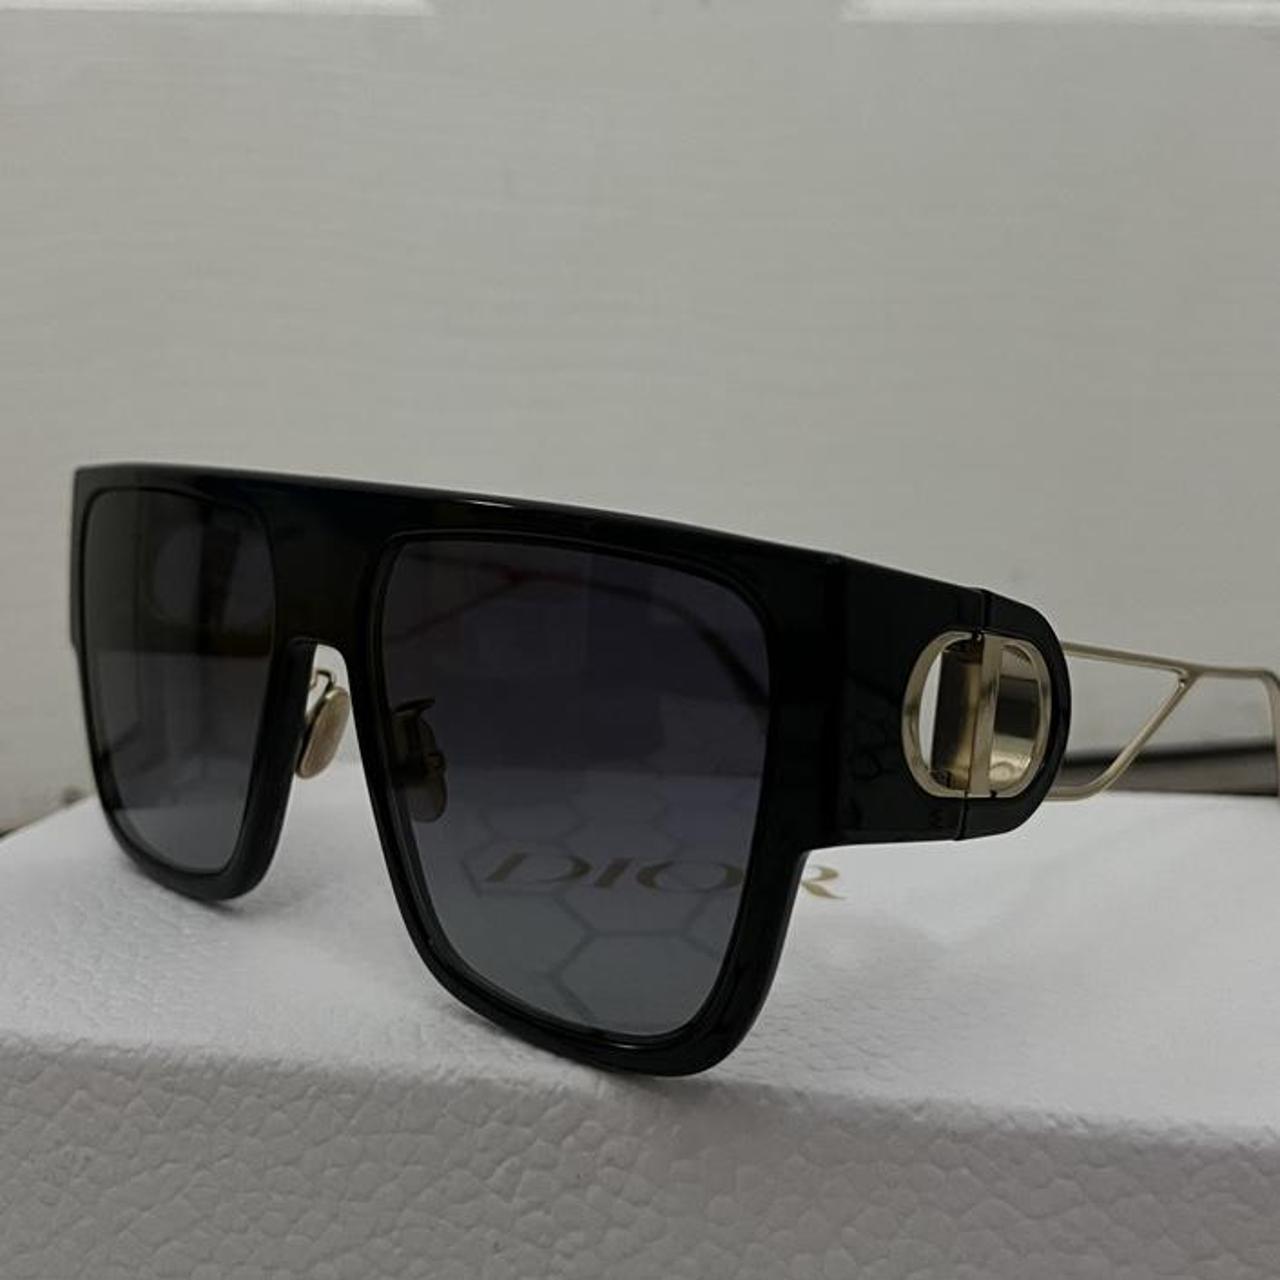 Dior Women's Black and Gold Sunglasses | Depop